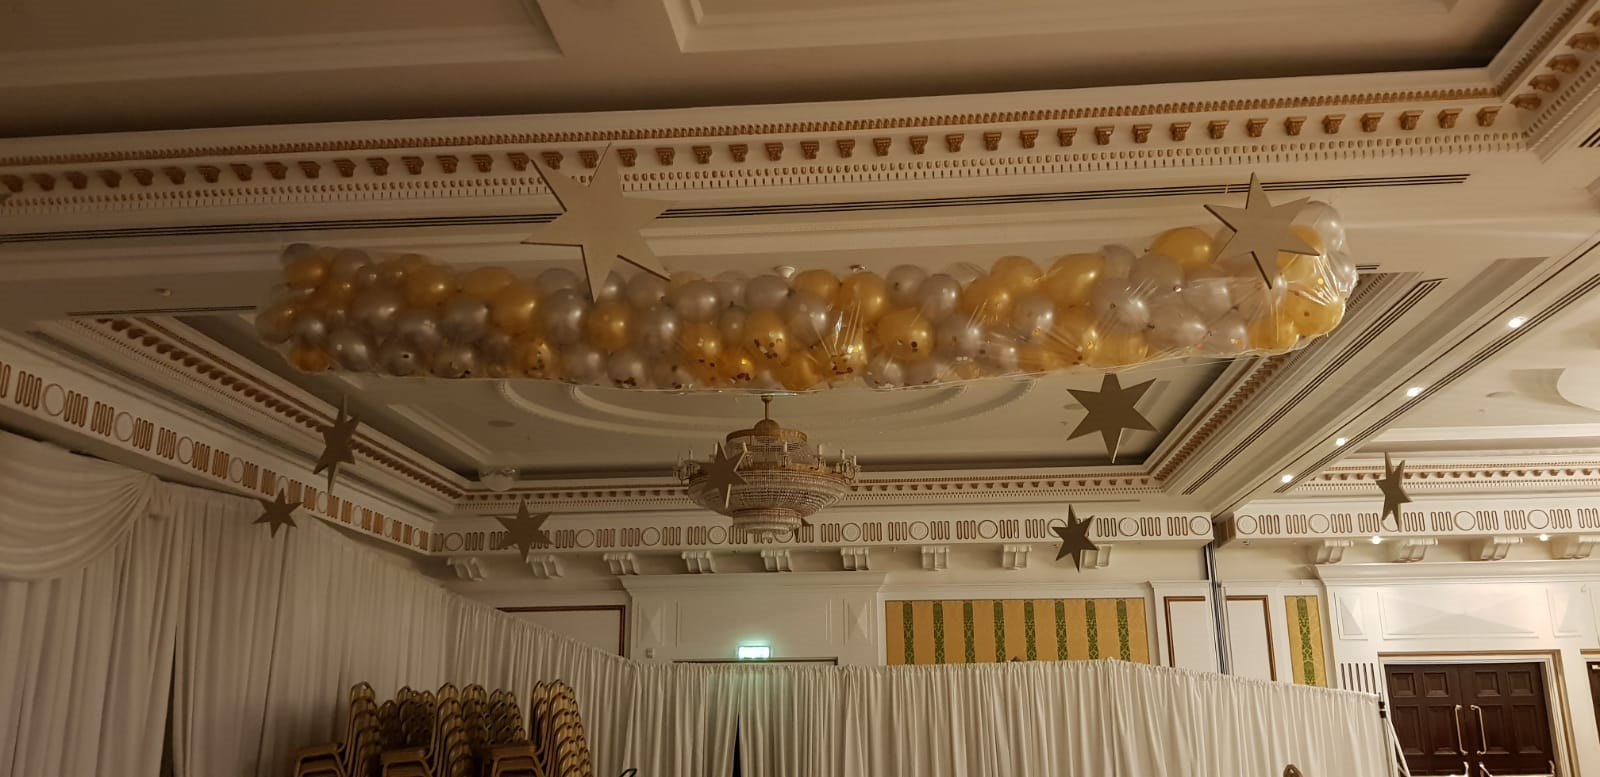 18ft balloon release net – Barry's Balloons